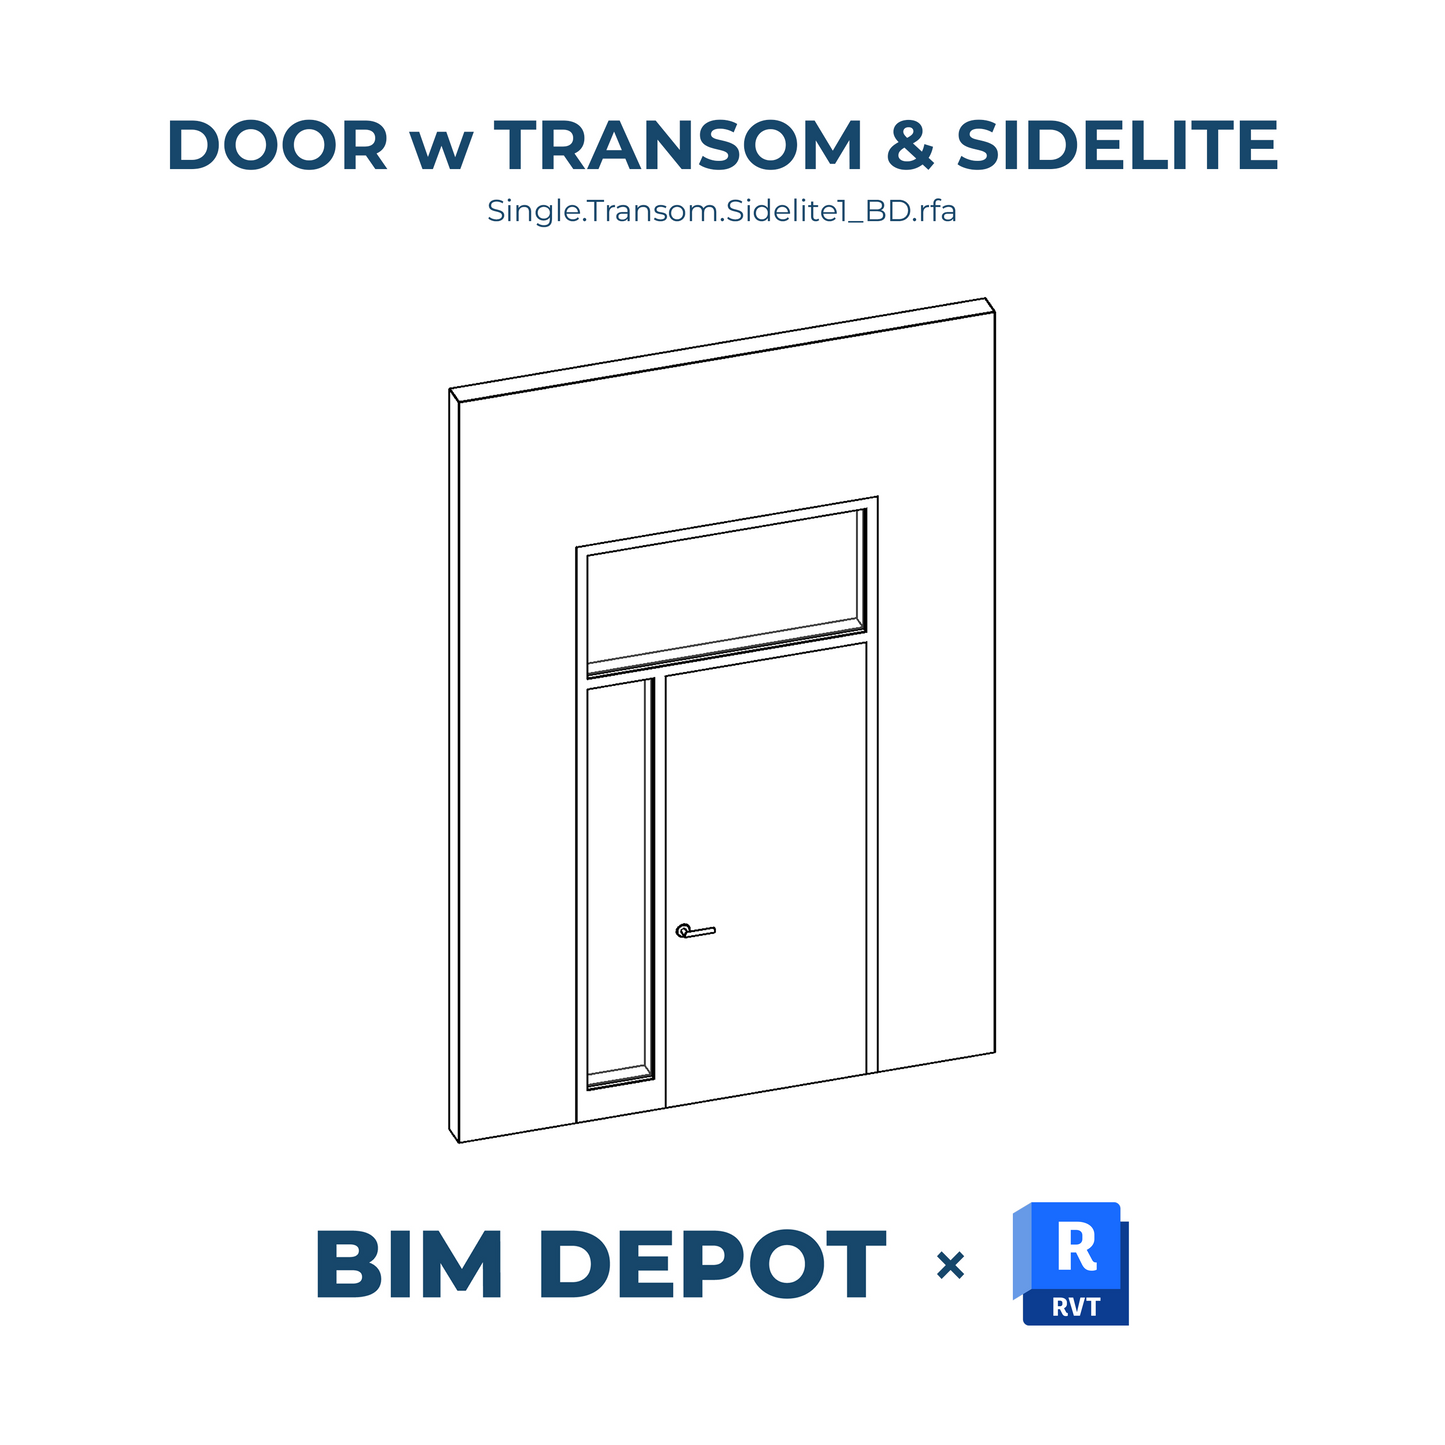 Door with Transom & Sidelite